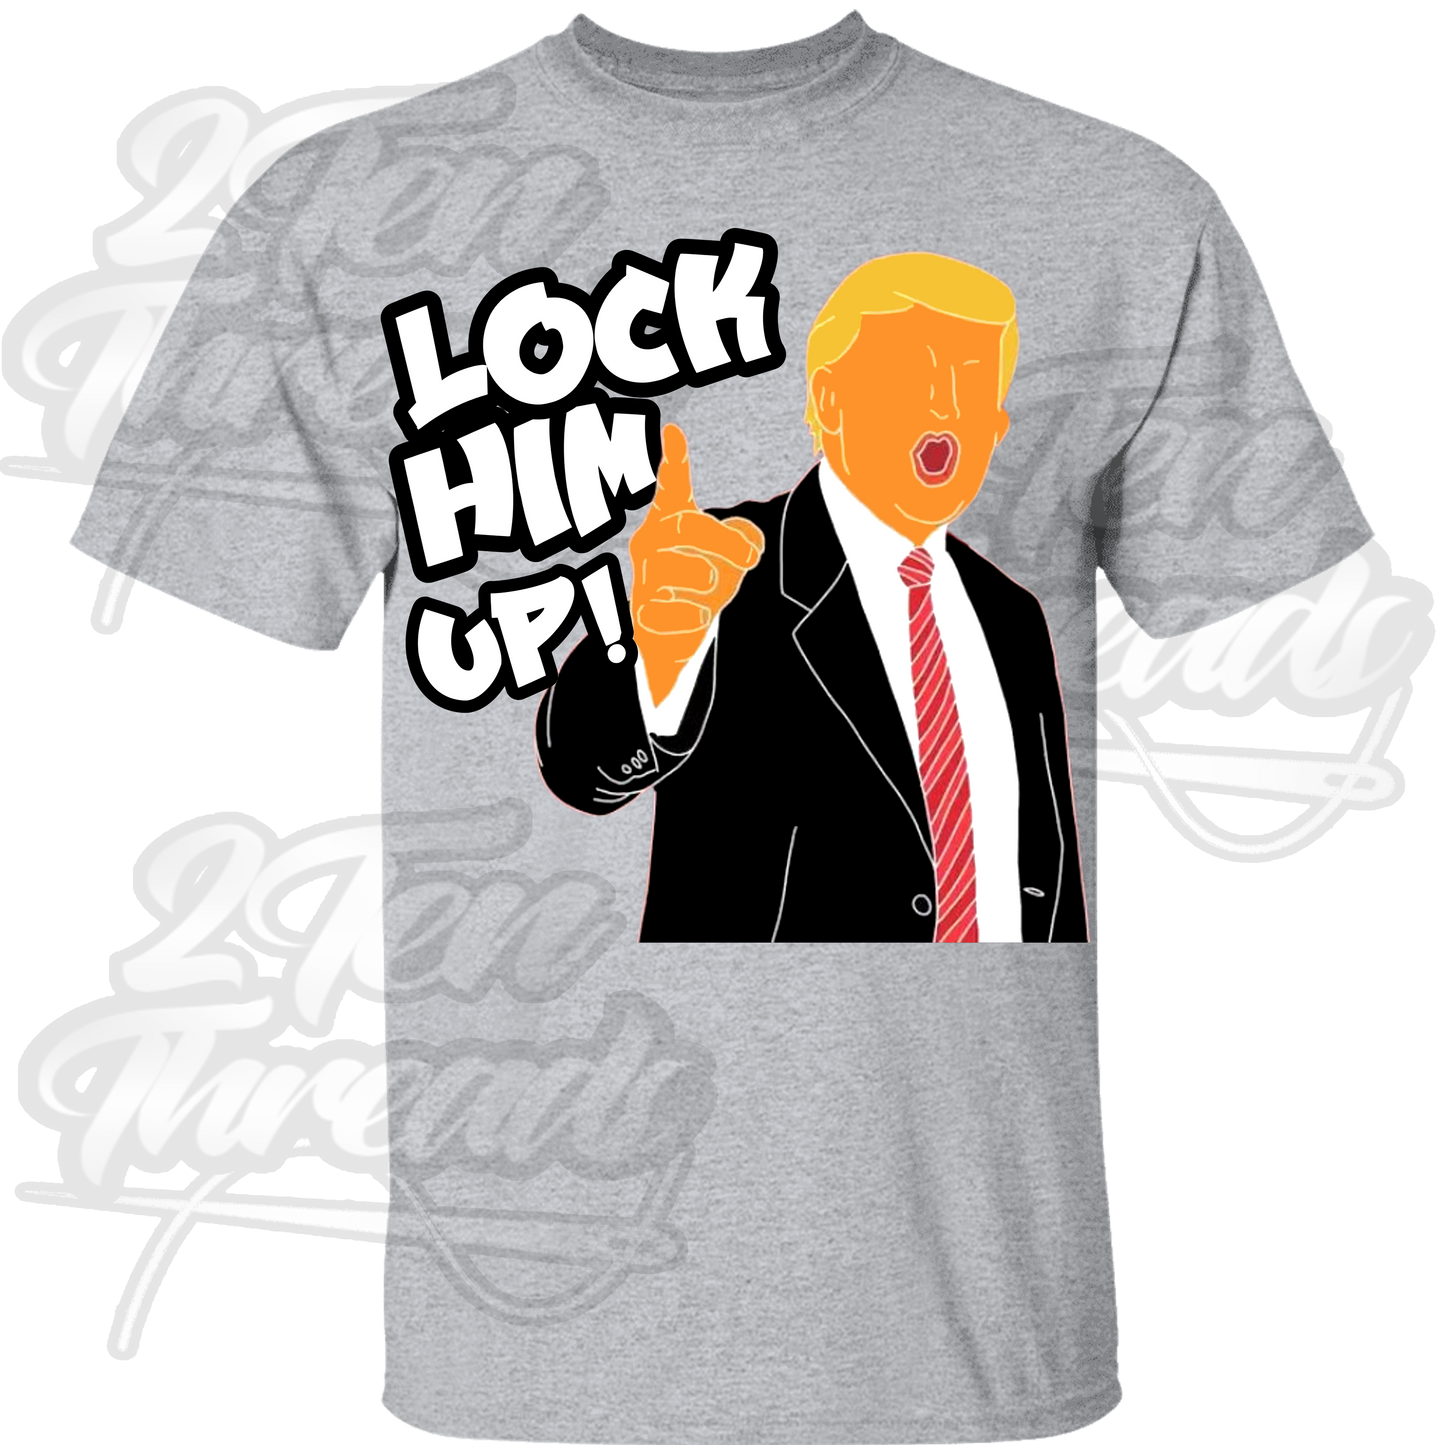 Lock him up! Trump Shirt